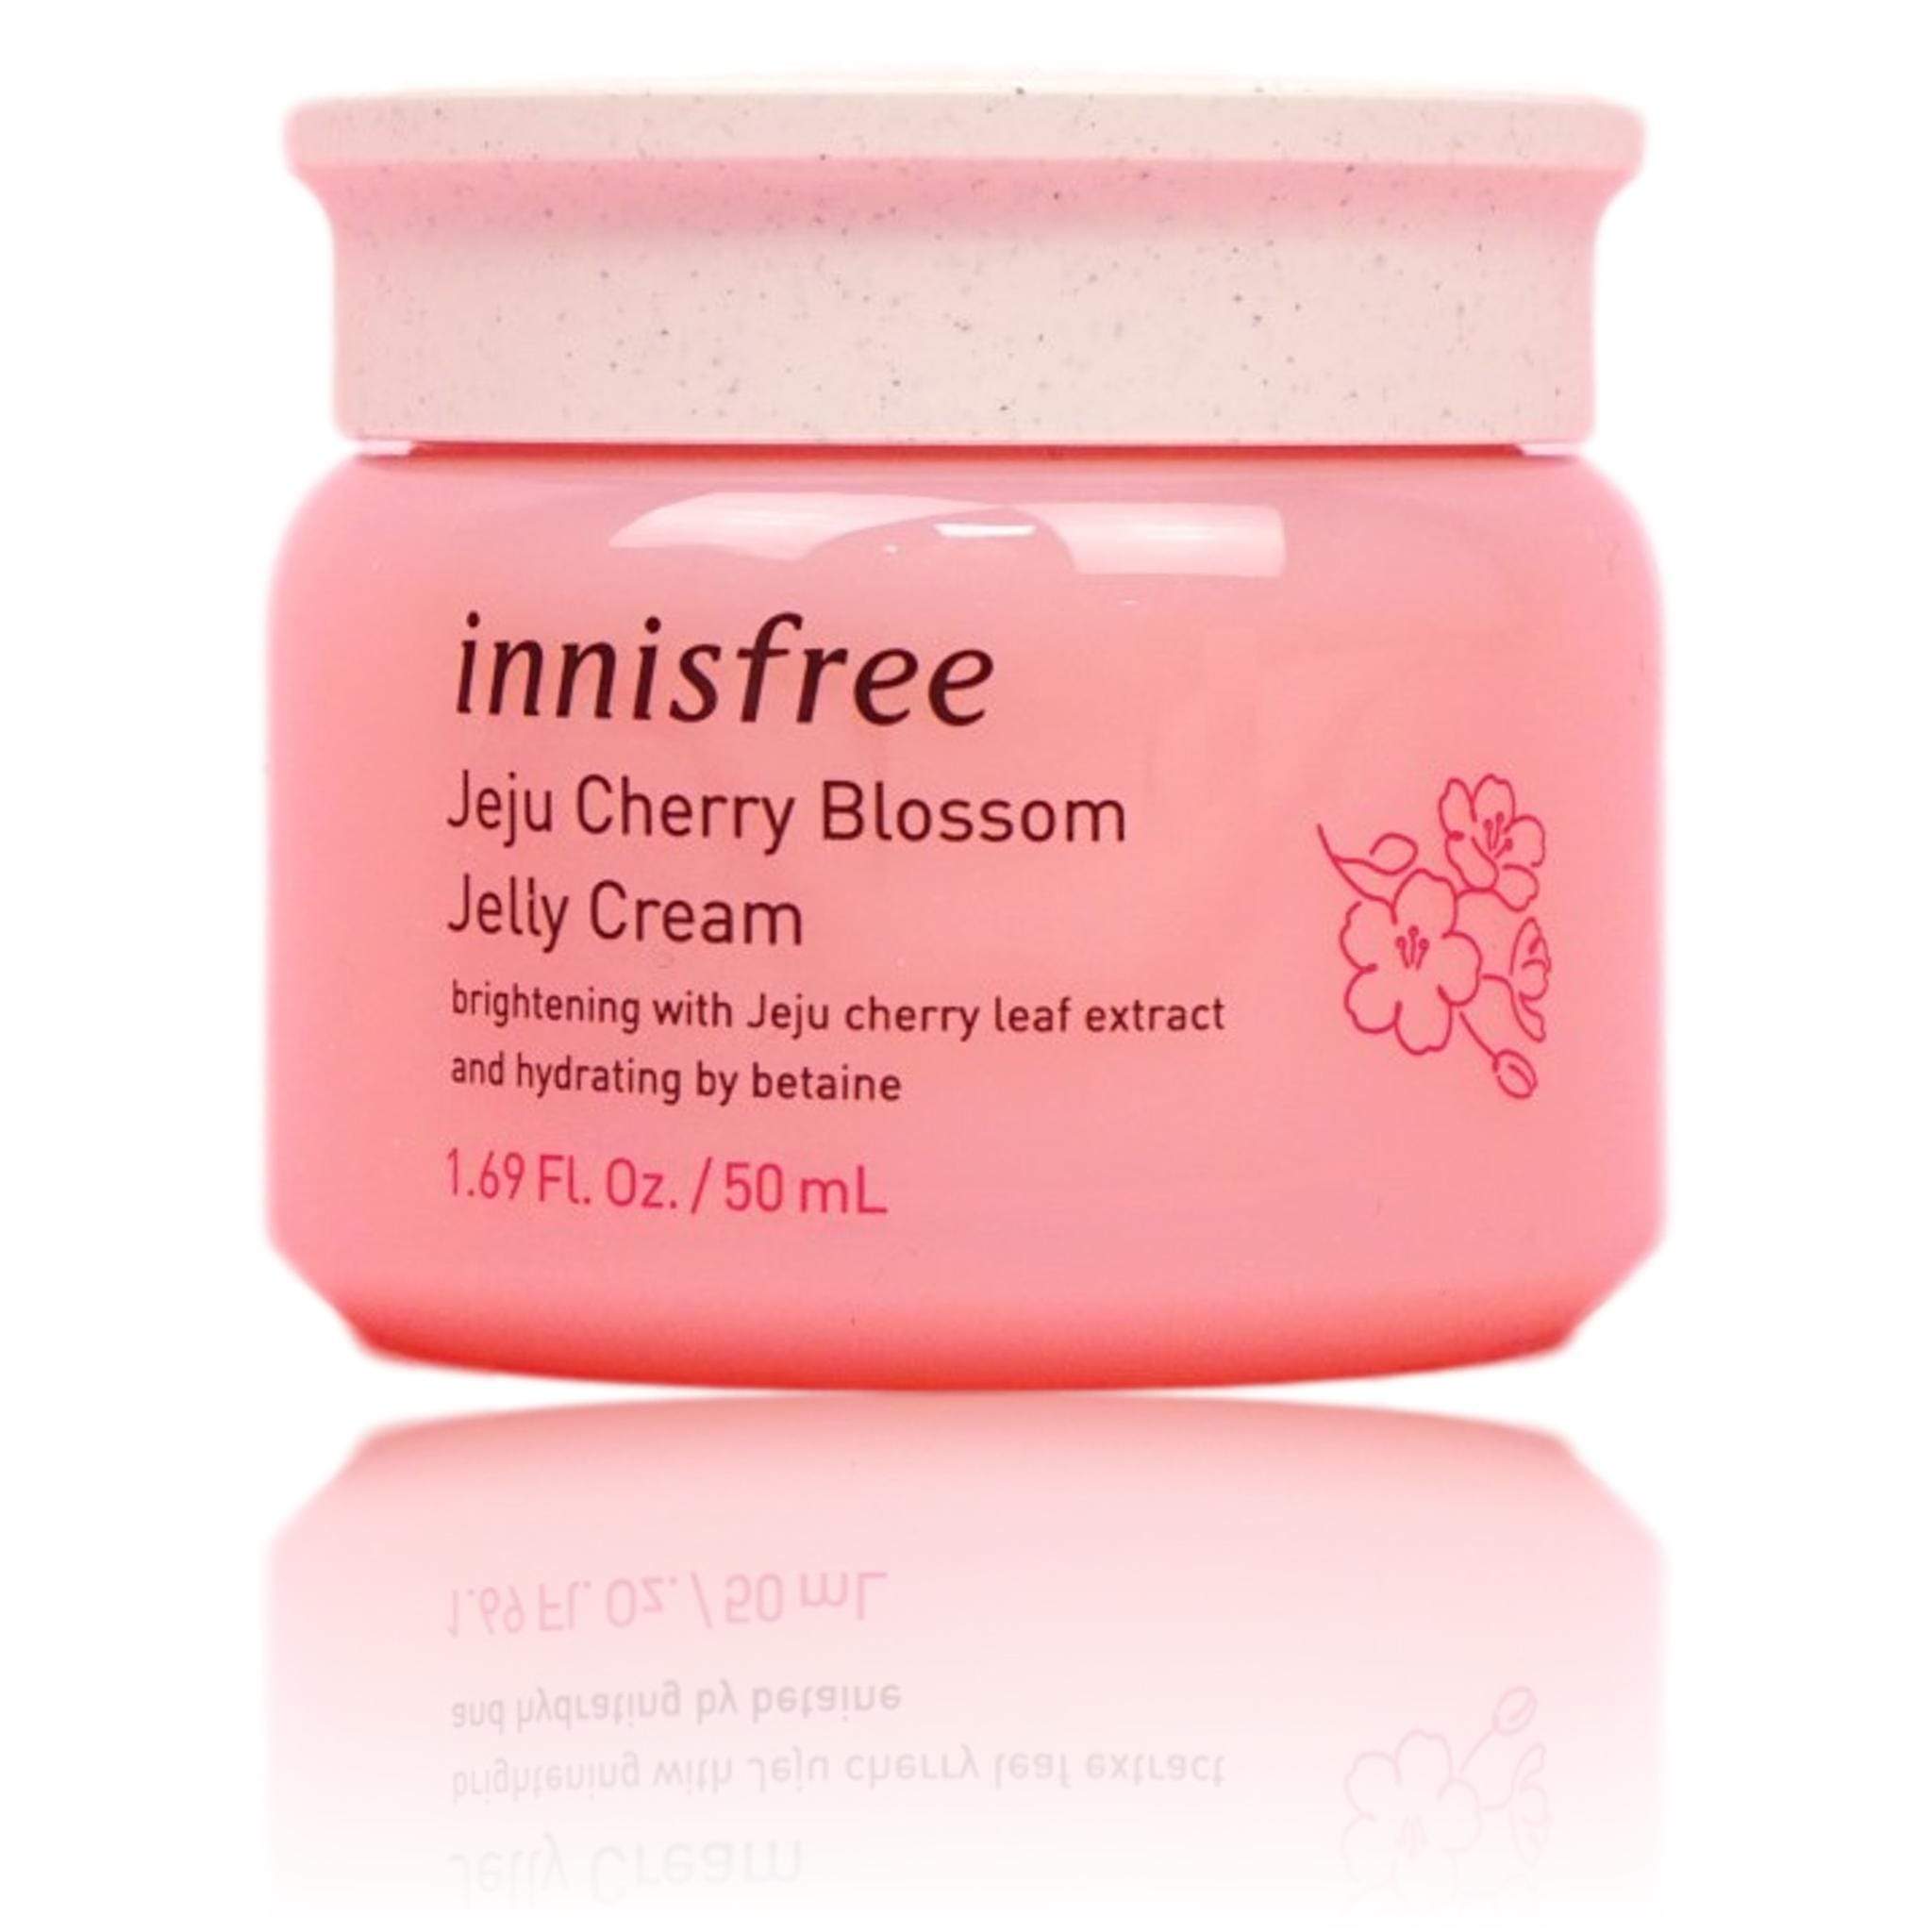 INNISFREE Jeju Cherry Blossom Dewy Glow Jelly Cream, 50 ml, Skin Care, London Loves Beauty